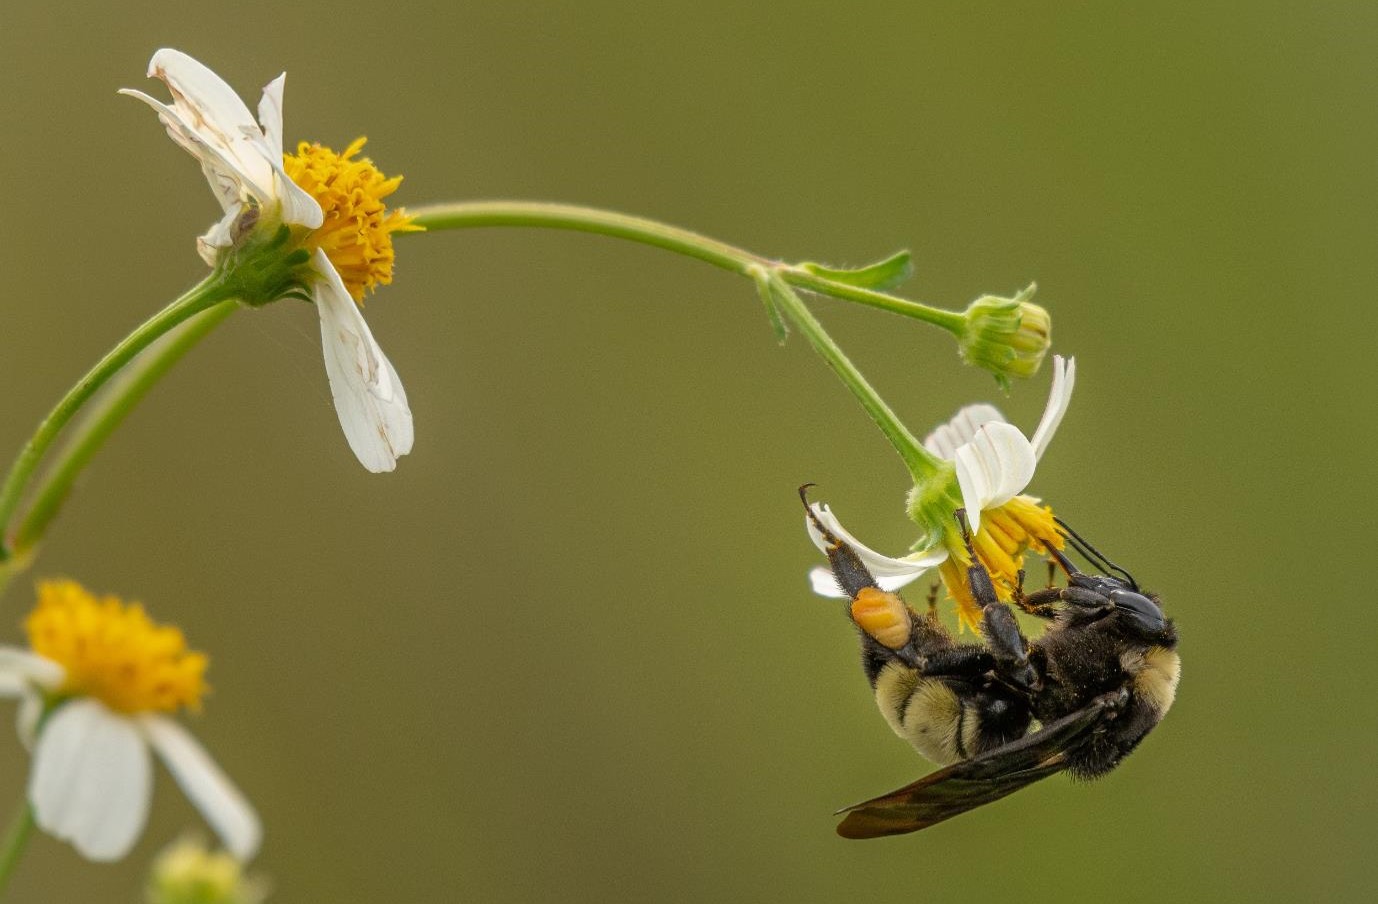 "Harvest Time - American Bumblebee on Spanish Needle" Novice Honorable Mention: Lee Ann Posavad, Davenport
